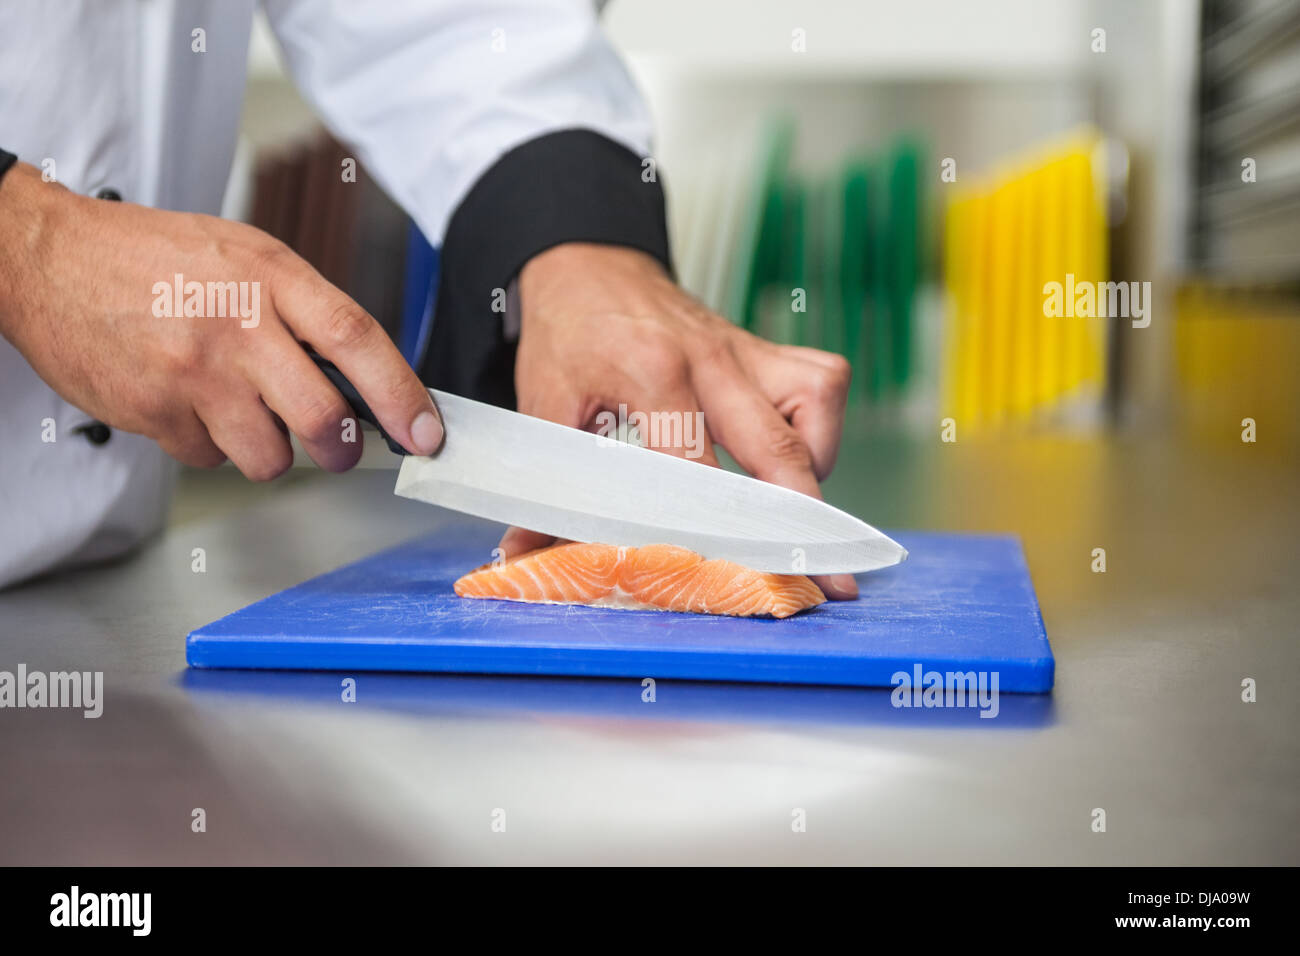 https://c8.alamy.com/comp/DJA09W/chef-slicing-raw-salmon-with-knife-on-blue-cutting-board-DJA09W.jpg